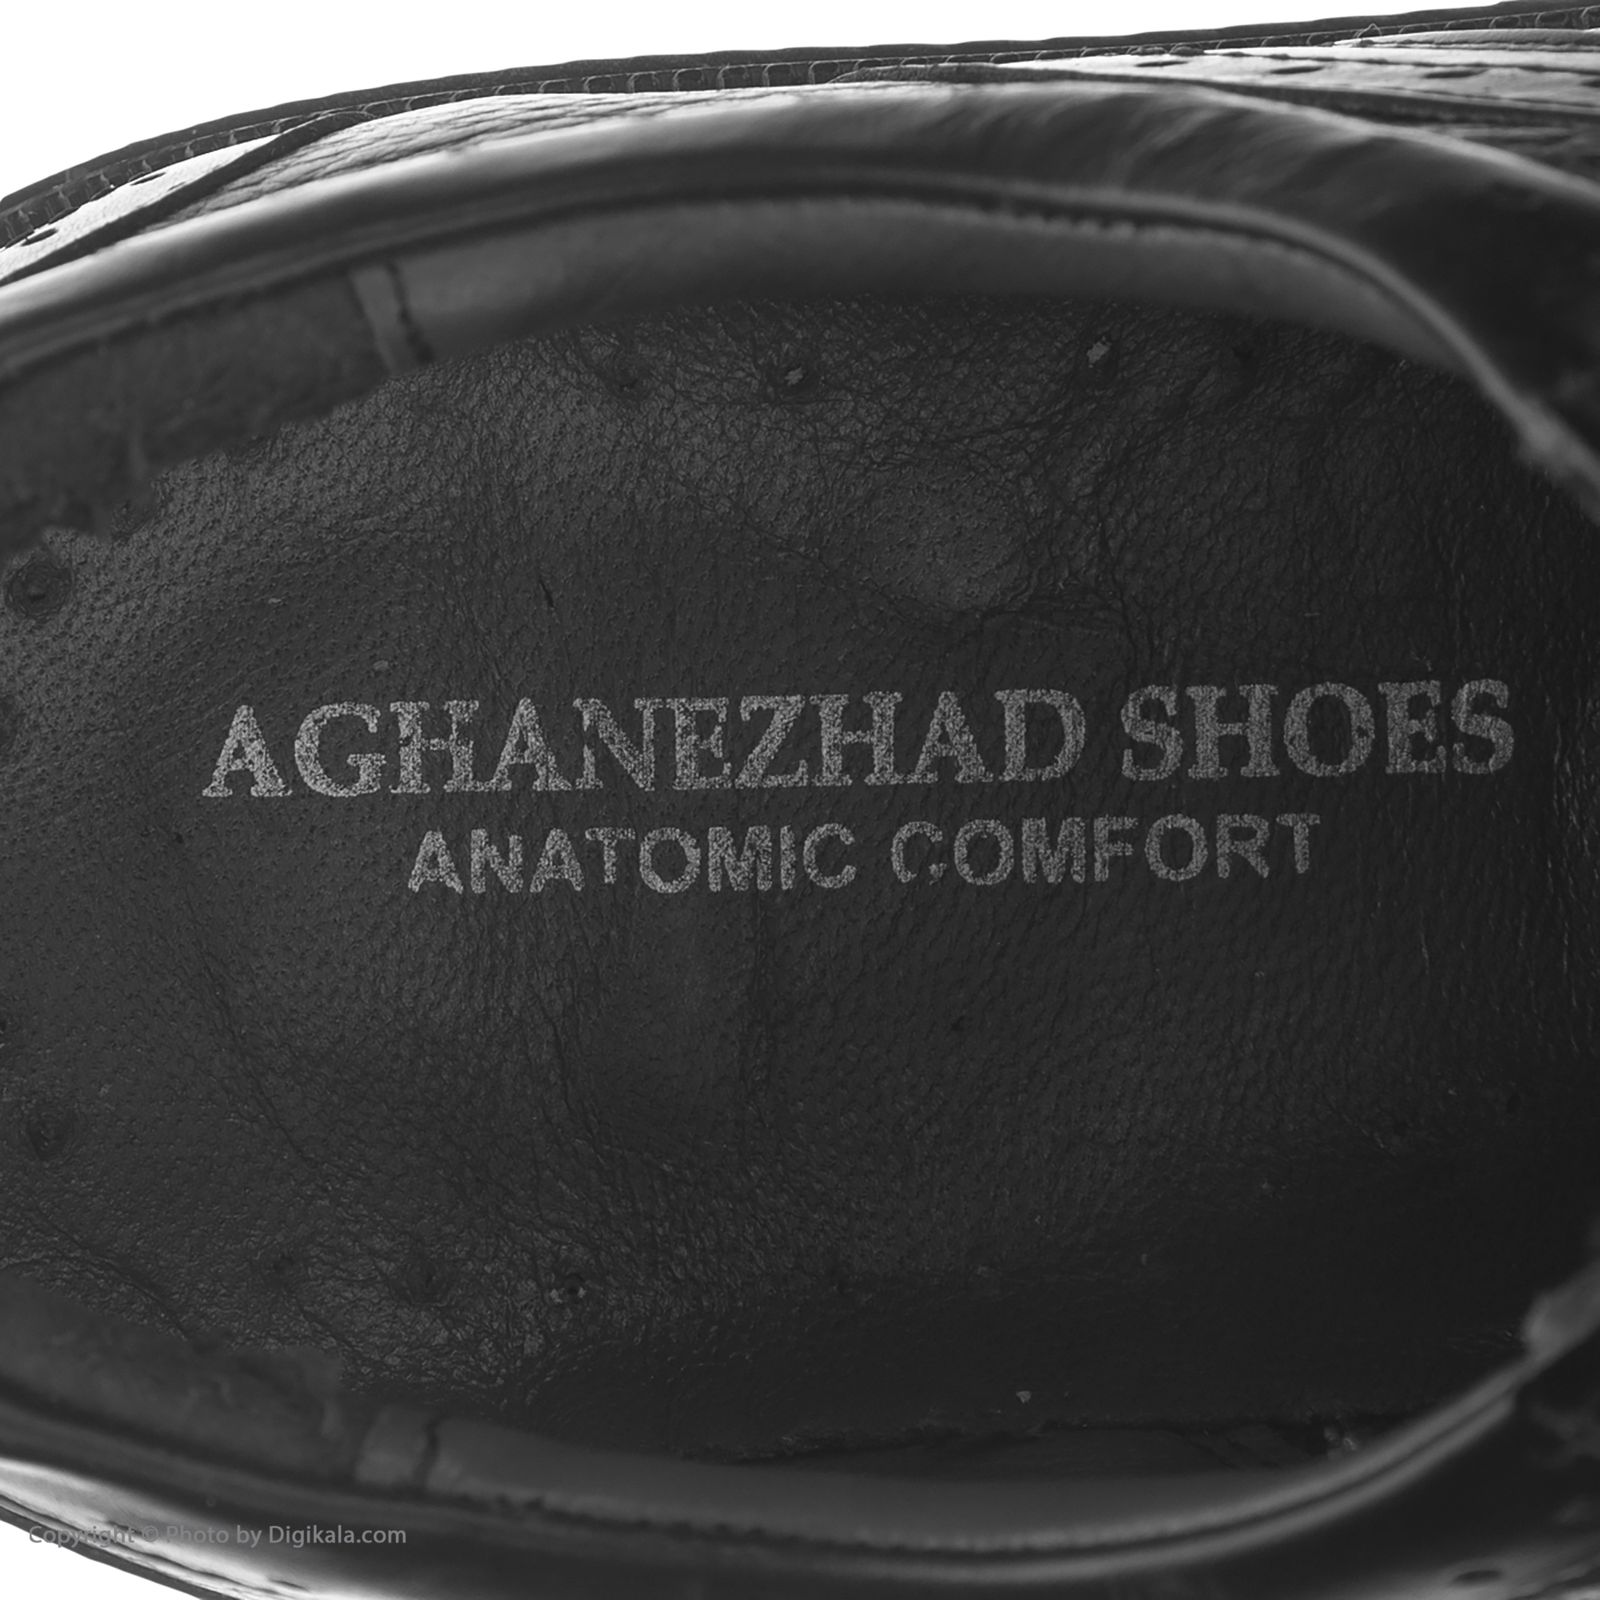 کفش روزمره مردانه آقانژاد مدل 10000-99